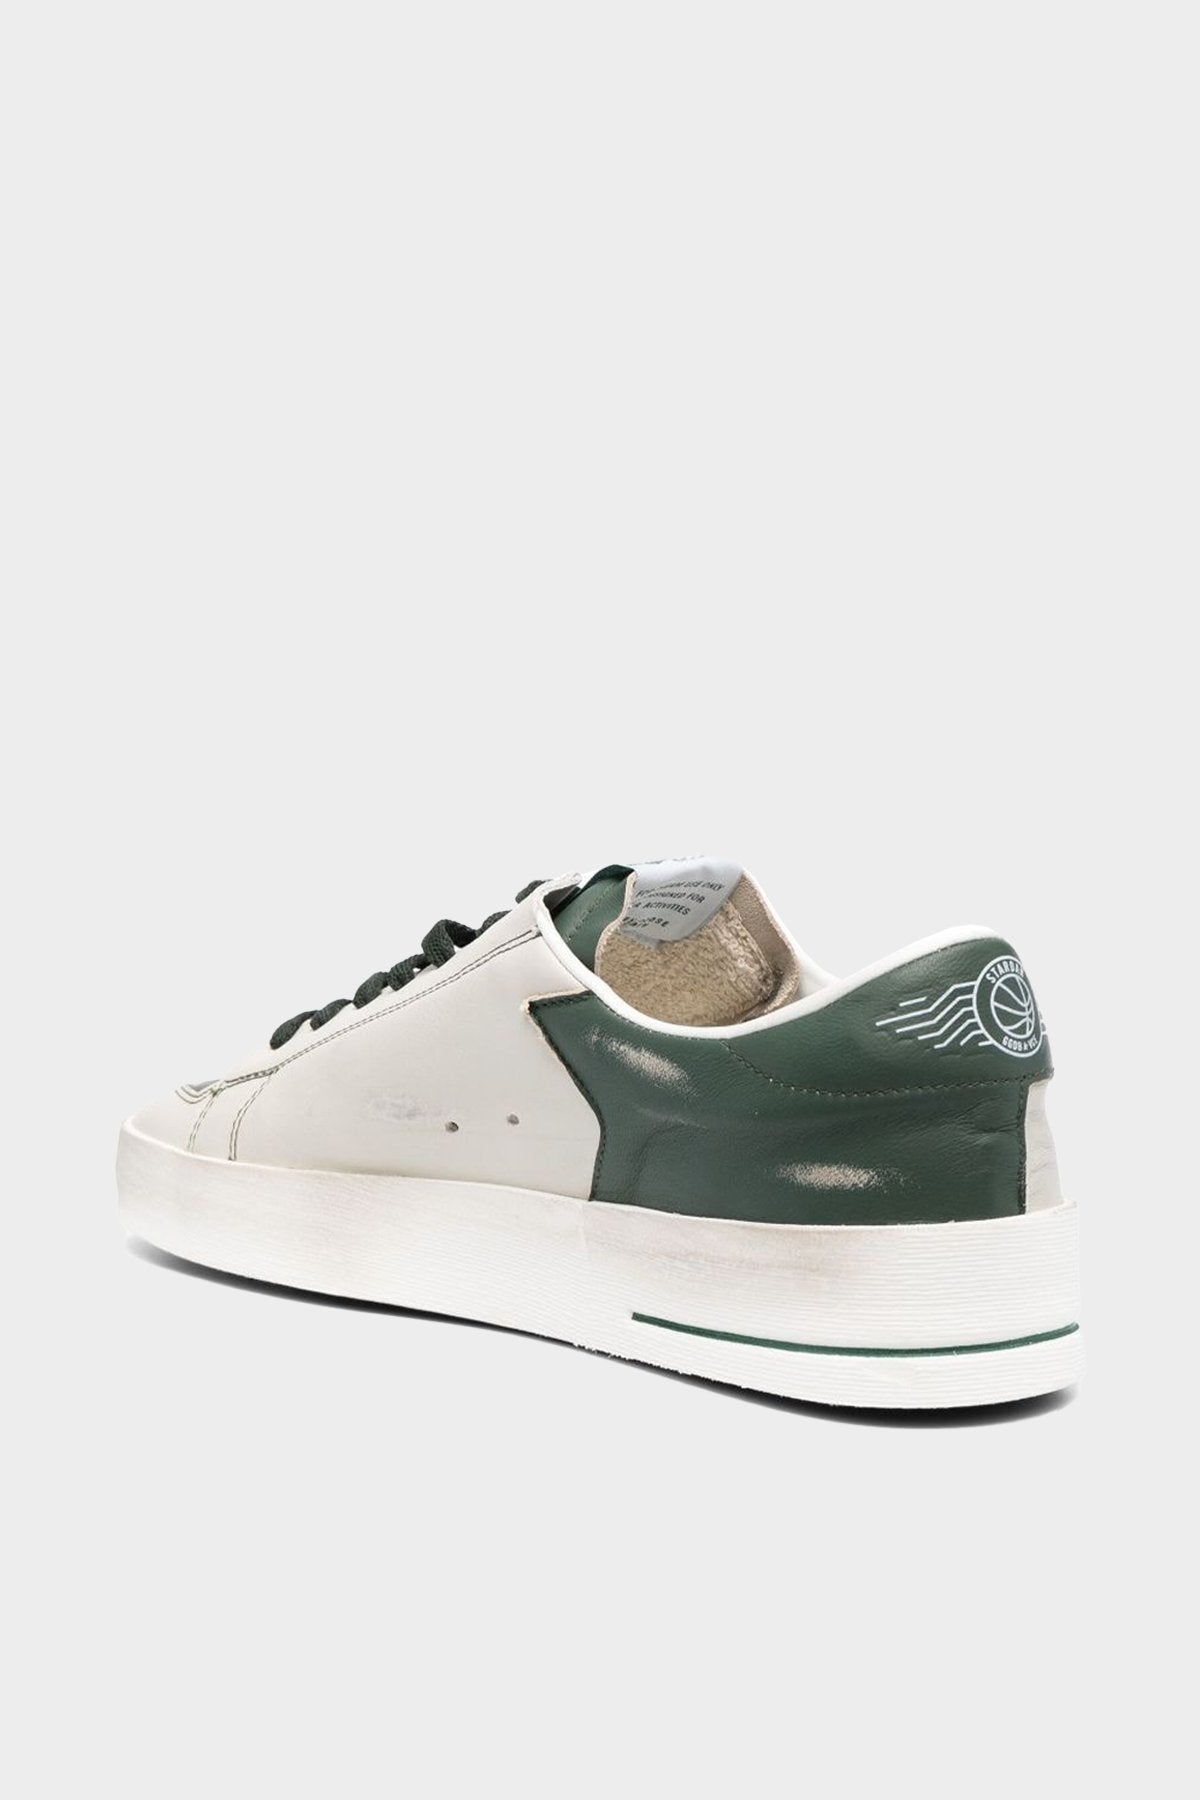 Stardan Green Nappa Leather Men Sneaker - shop-olivia.com